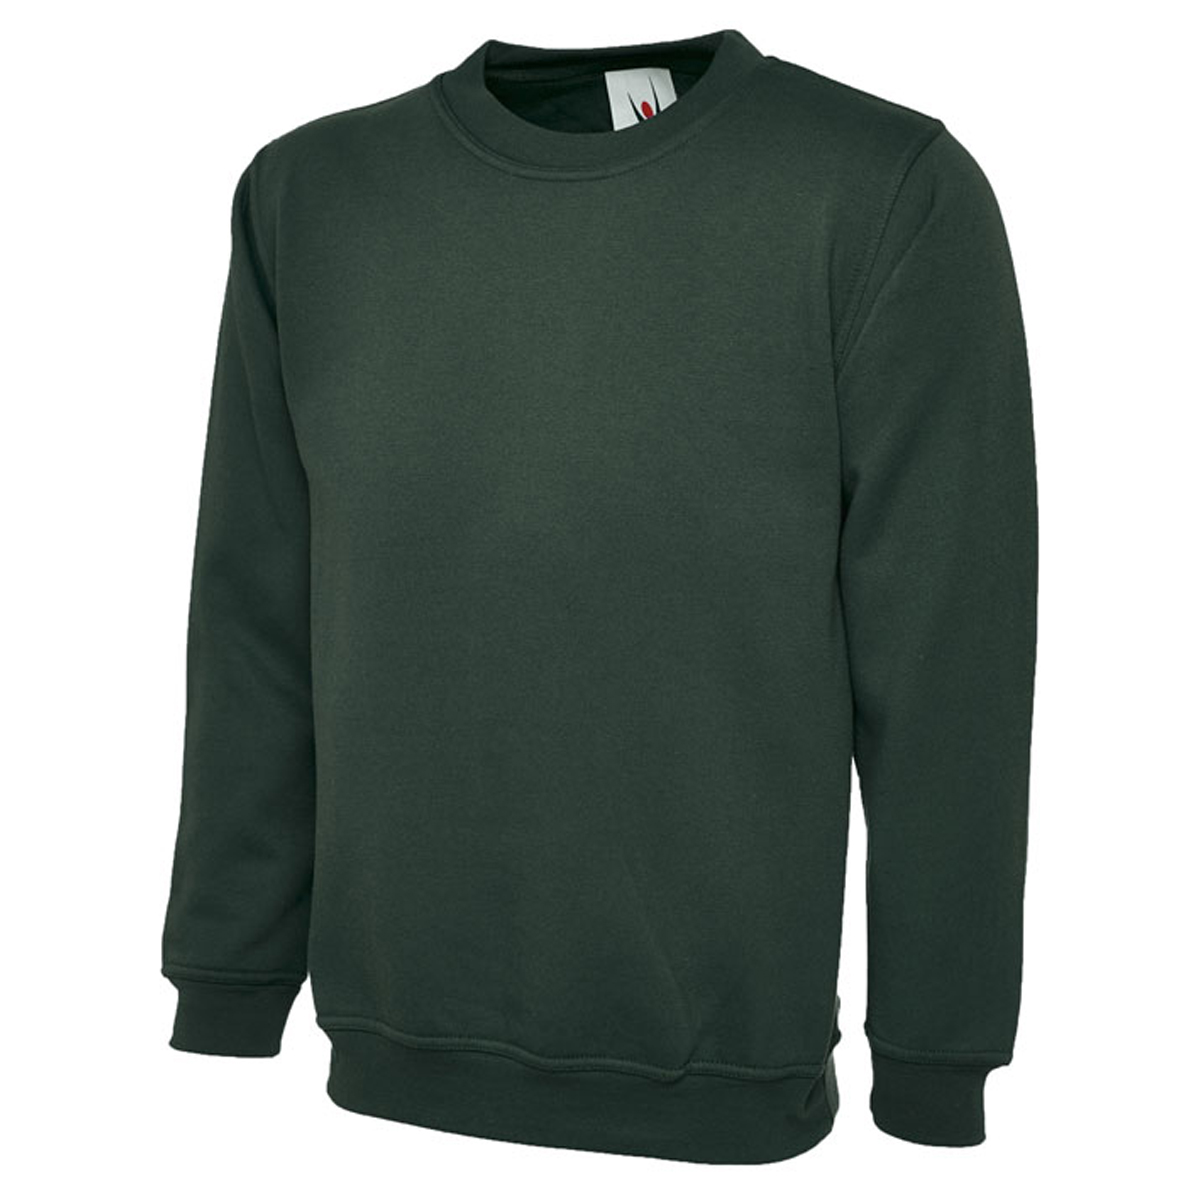 Uc203 300gsm classic sweatshirt - bottle green - xl